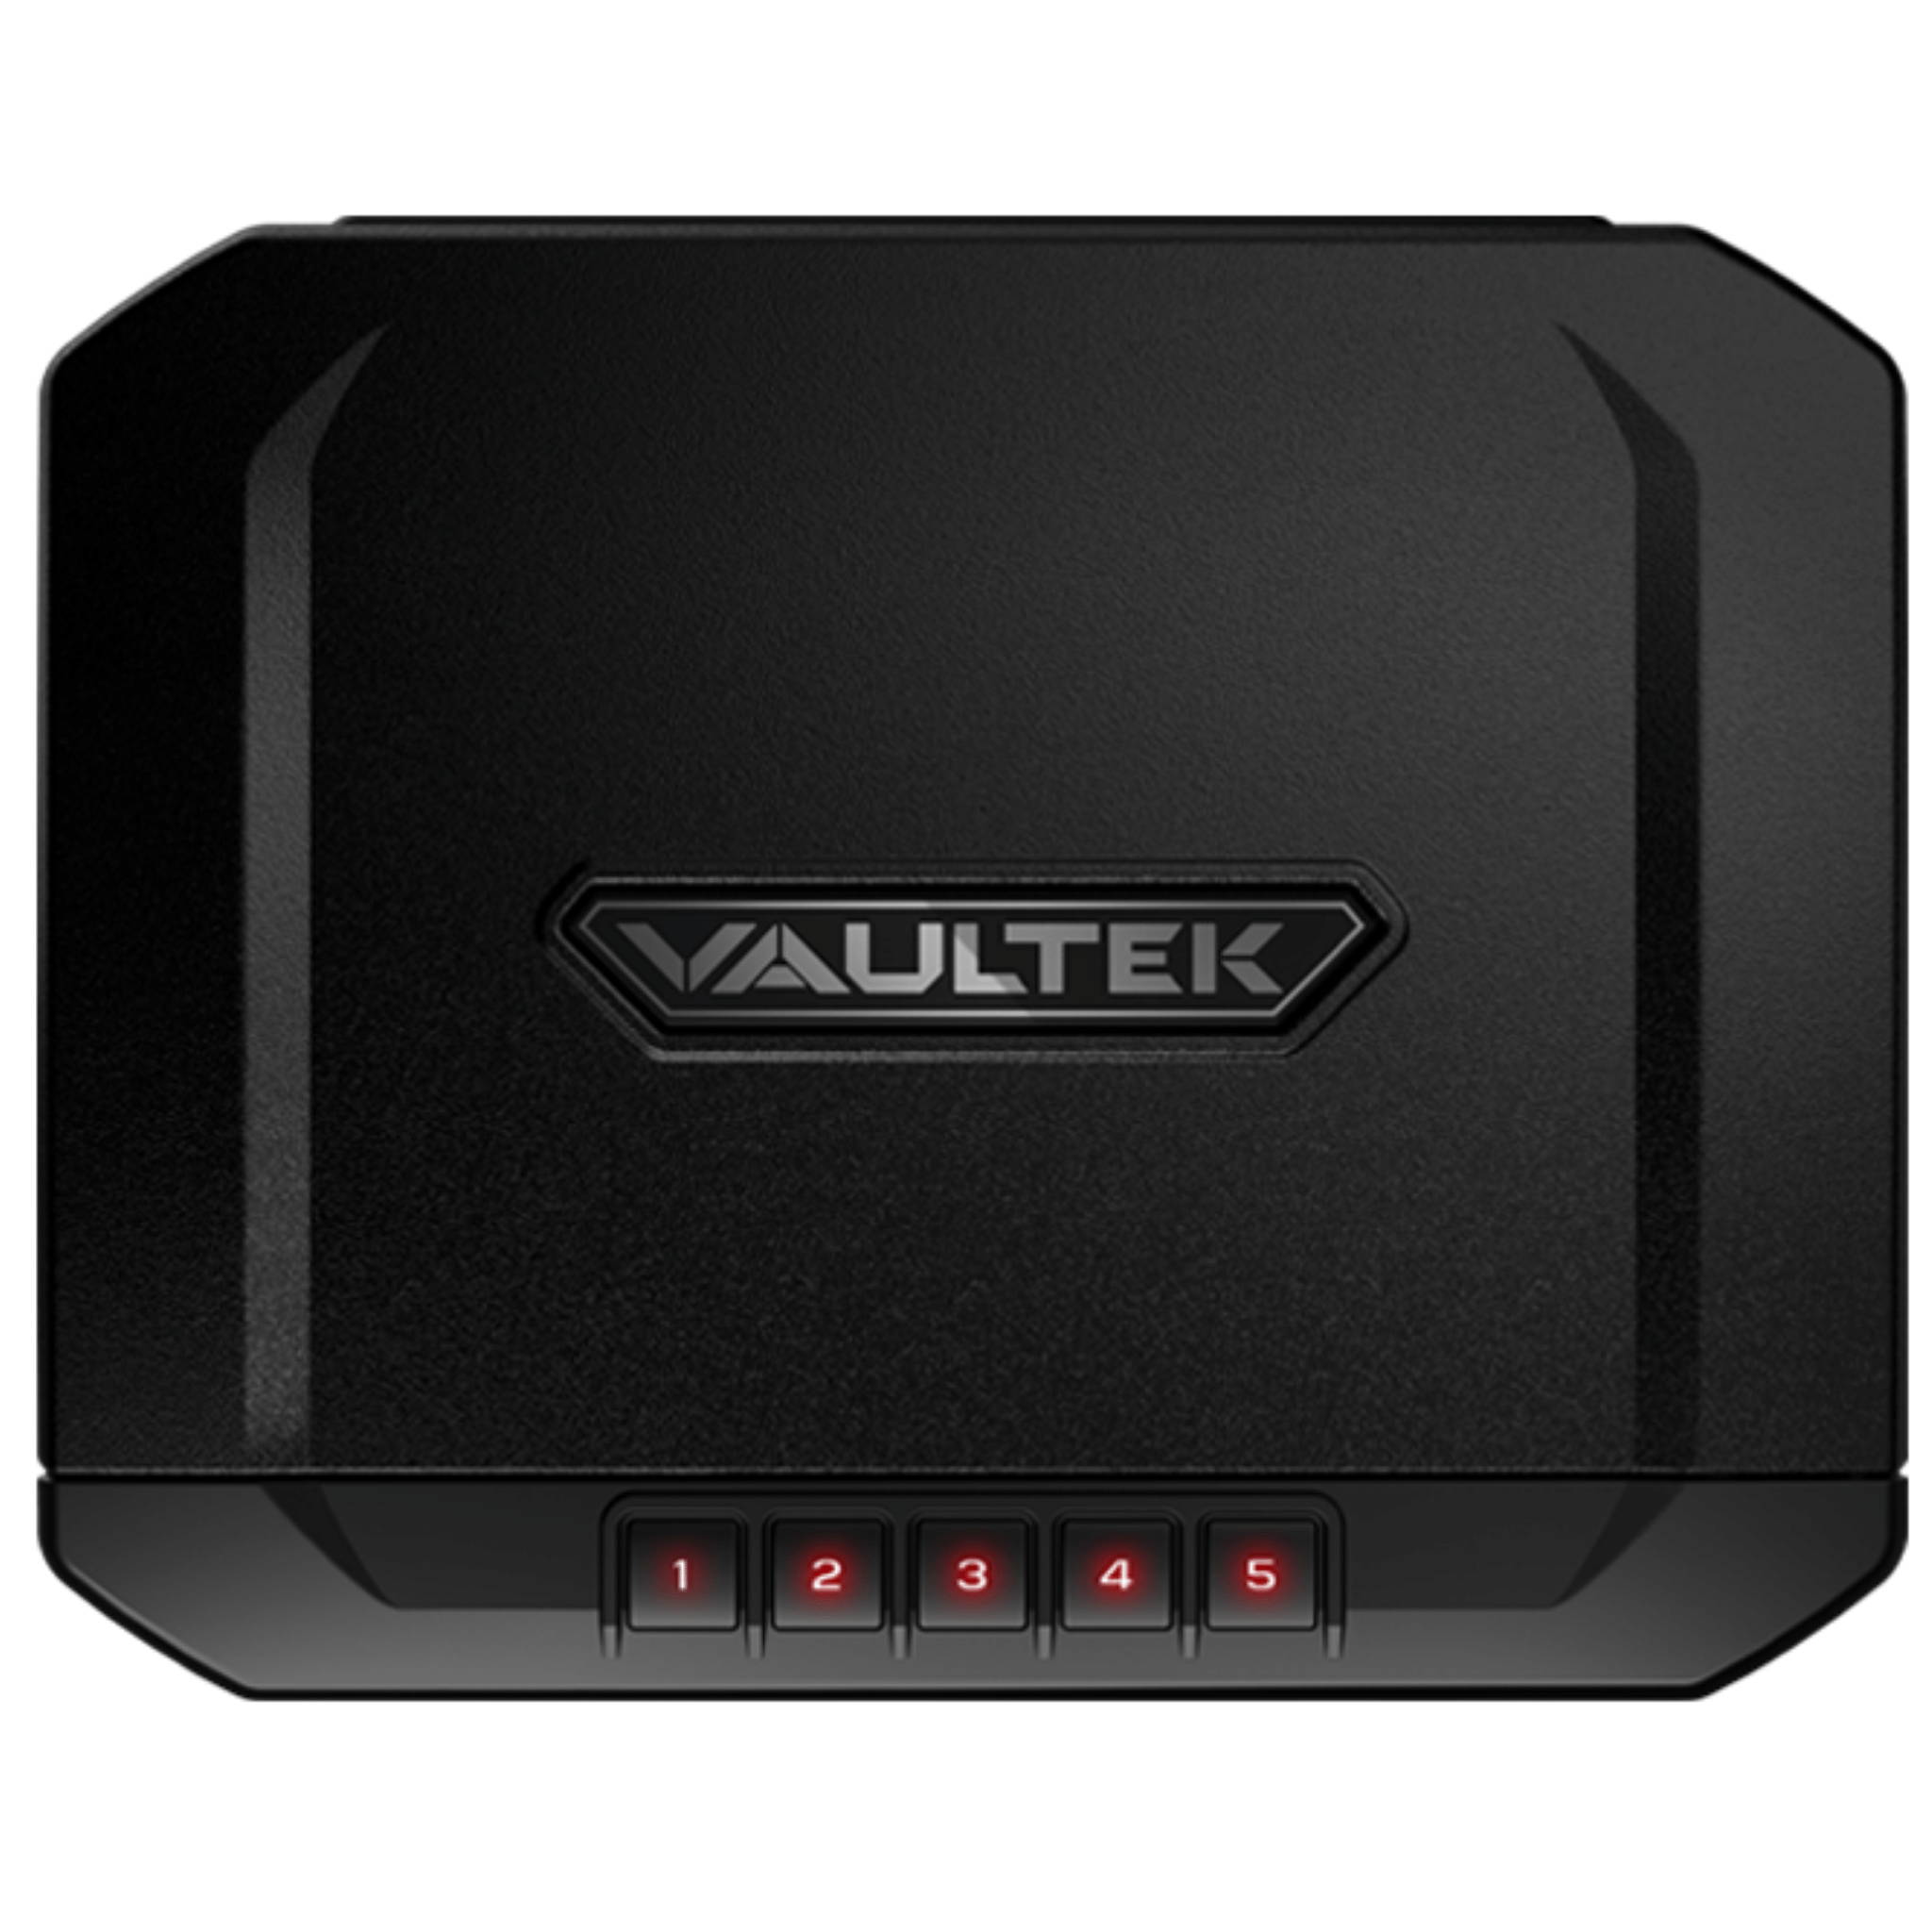 Vaultek VT10 - Bluetooth